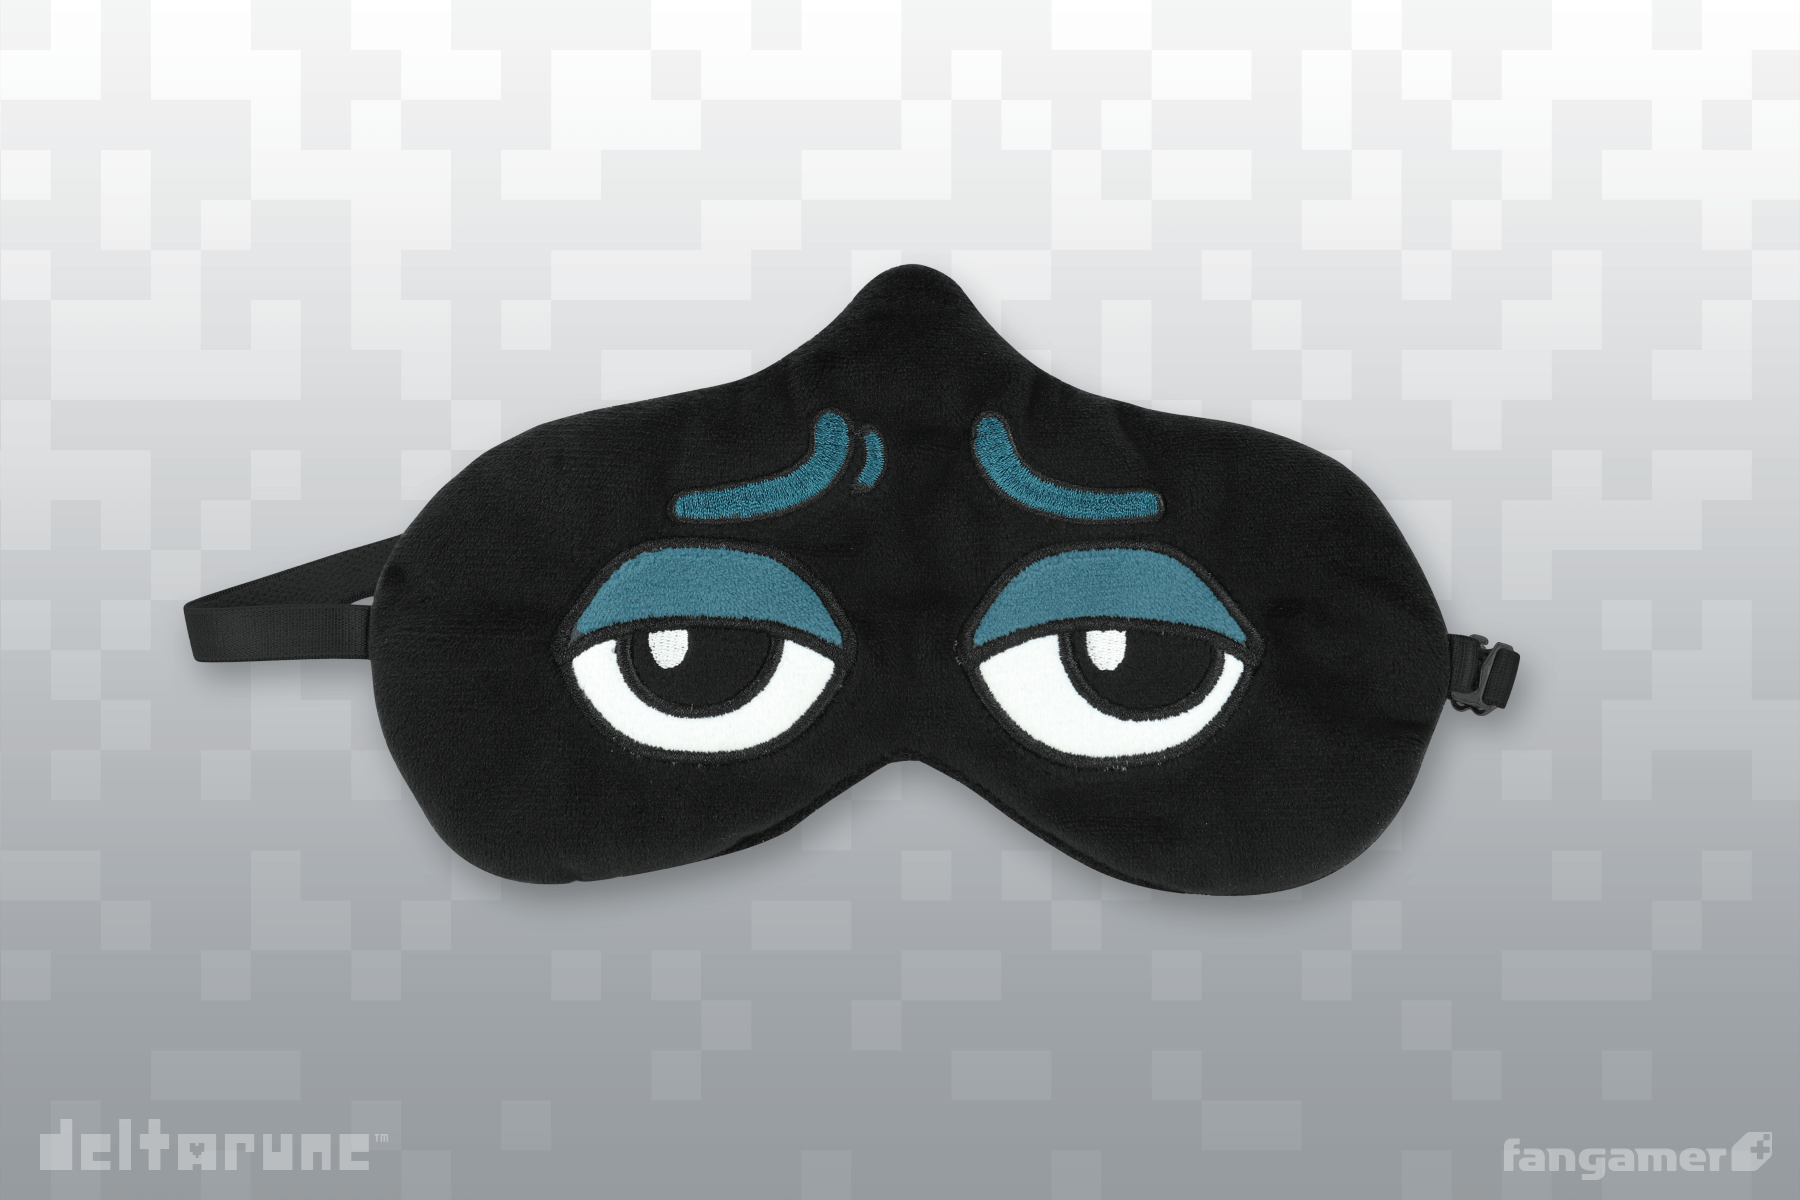 DELTARUNE - Lancer Sleep Mask - Fangamer Europe